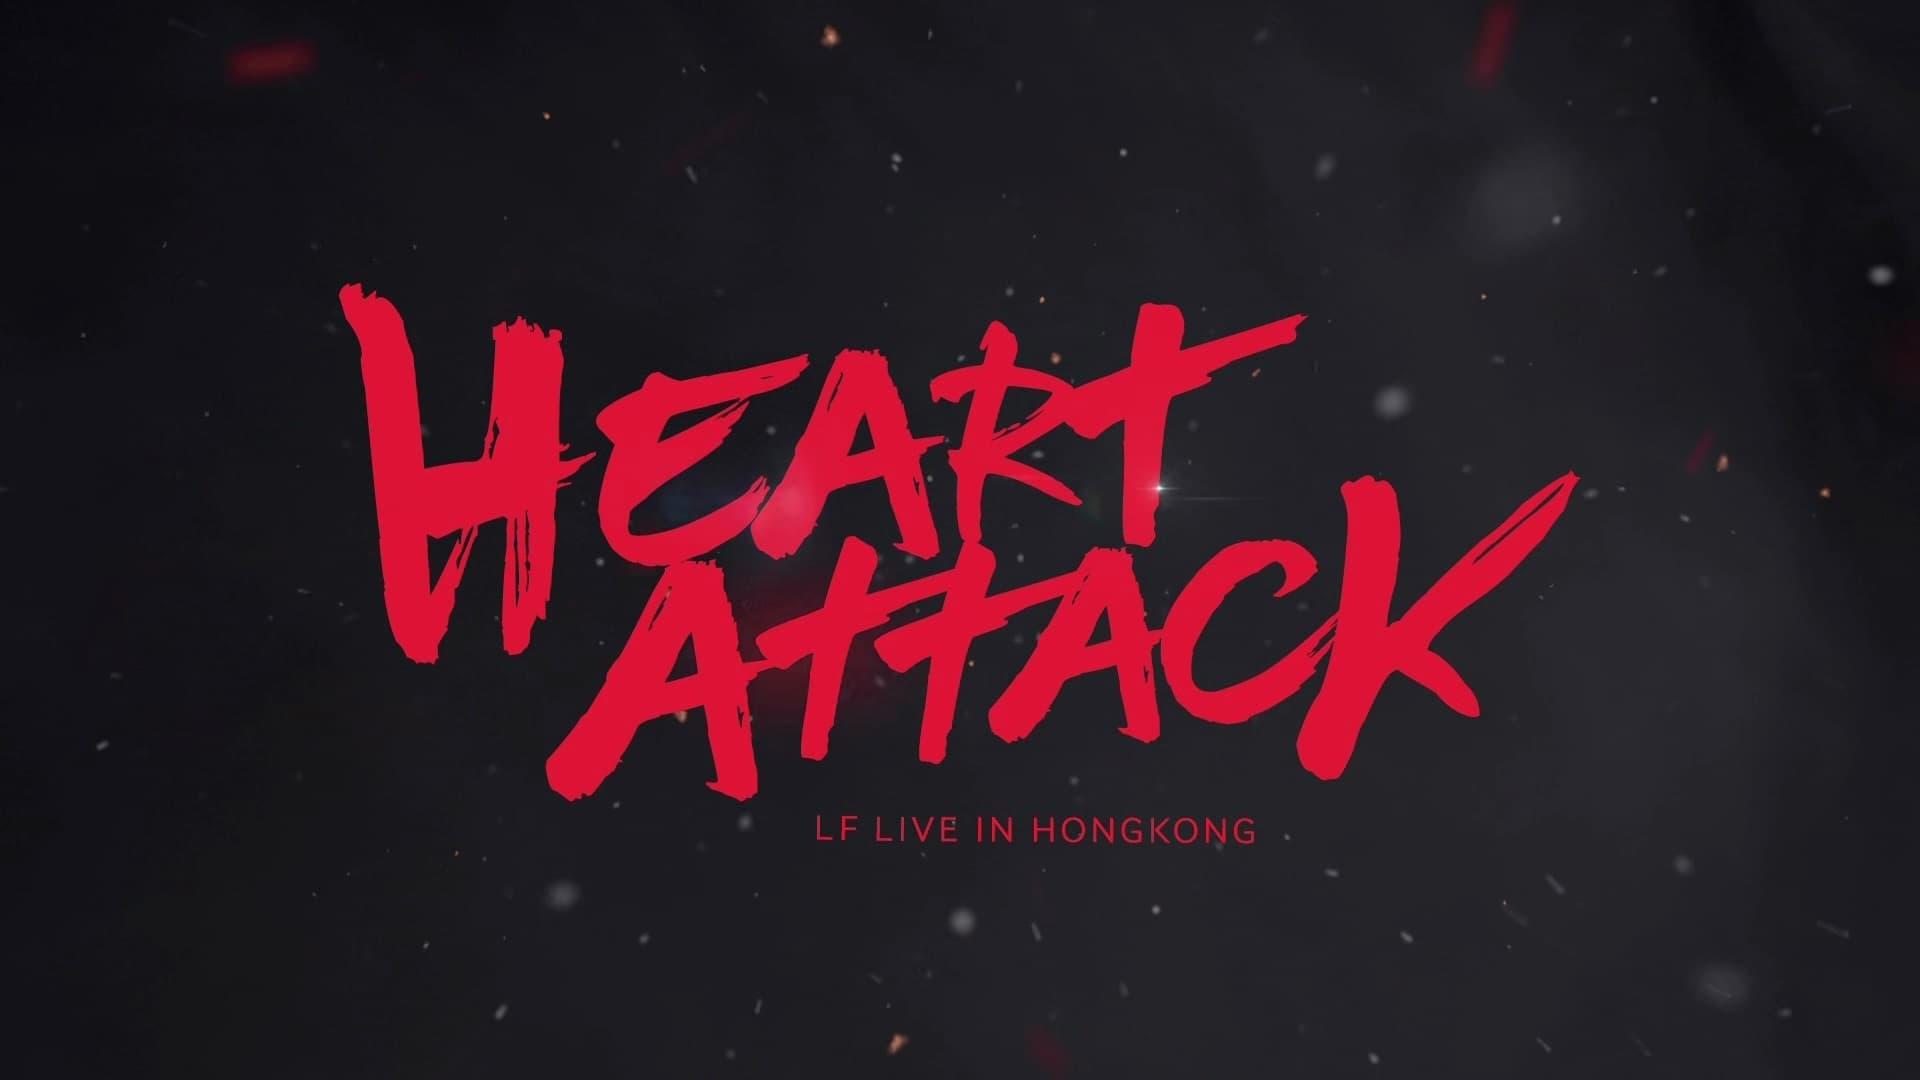 Heart Attack LF Live in HK backdrop